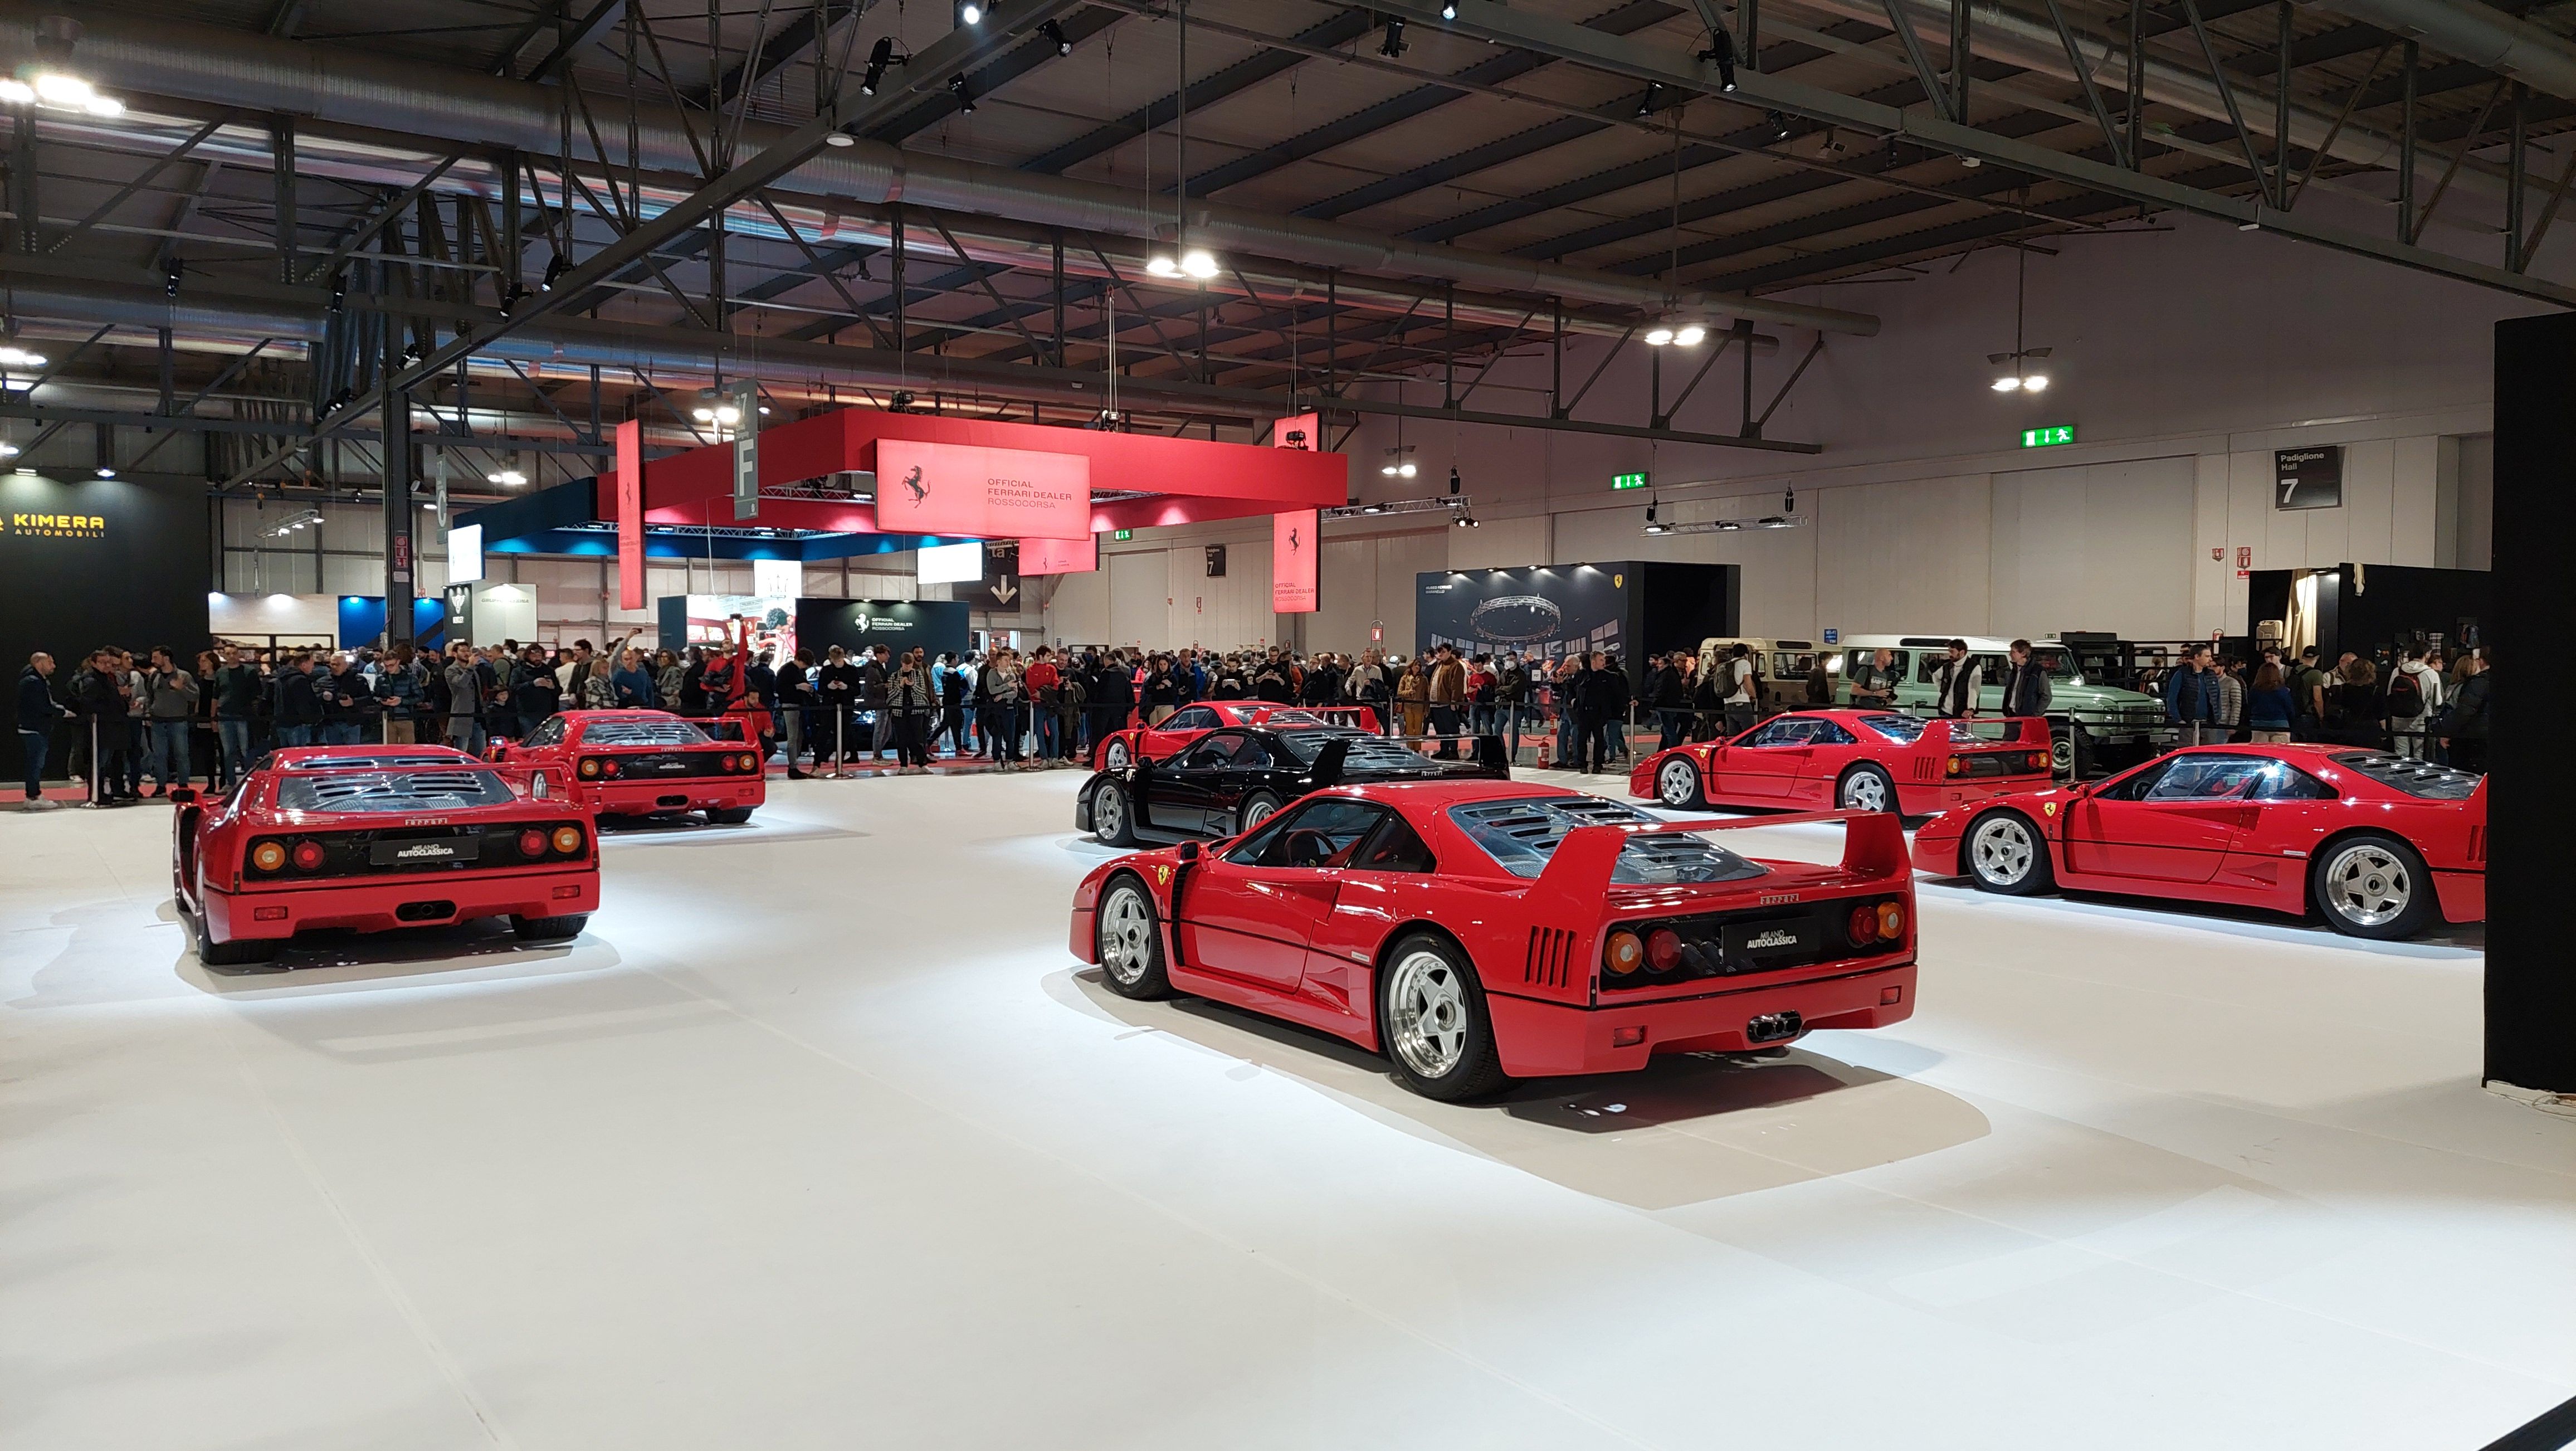 Array of Ferrari F40s at Milano Autoclassica